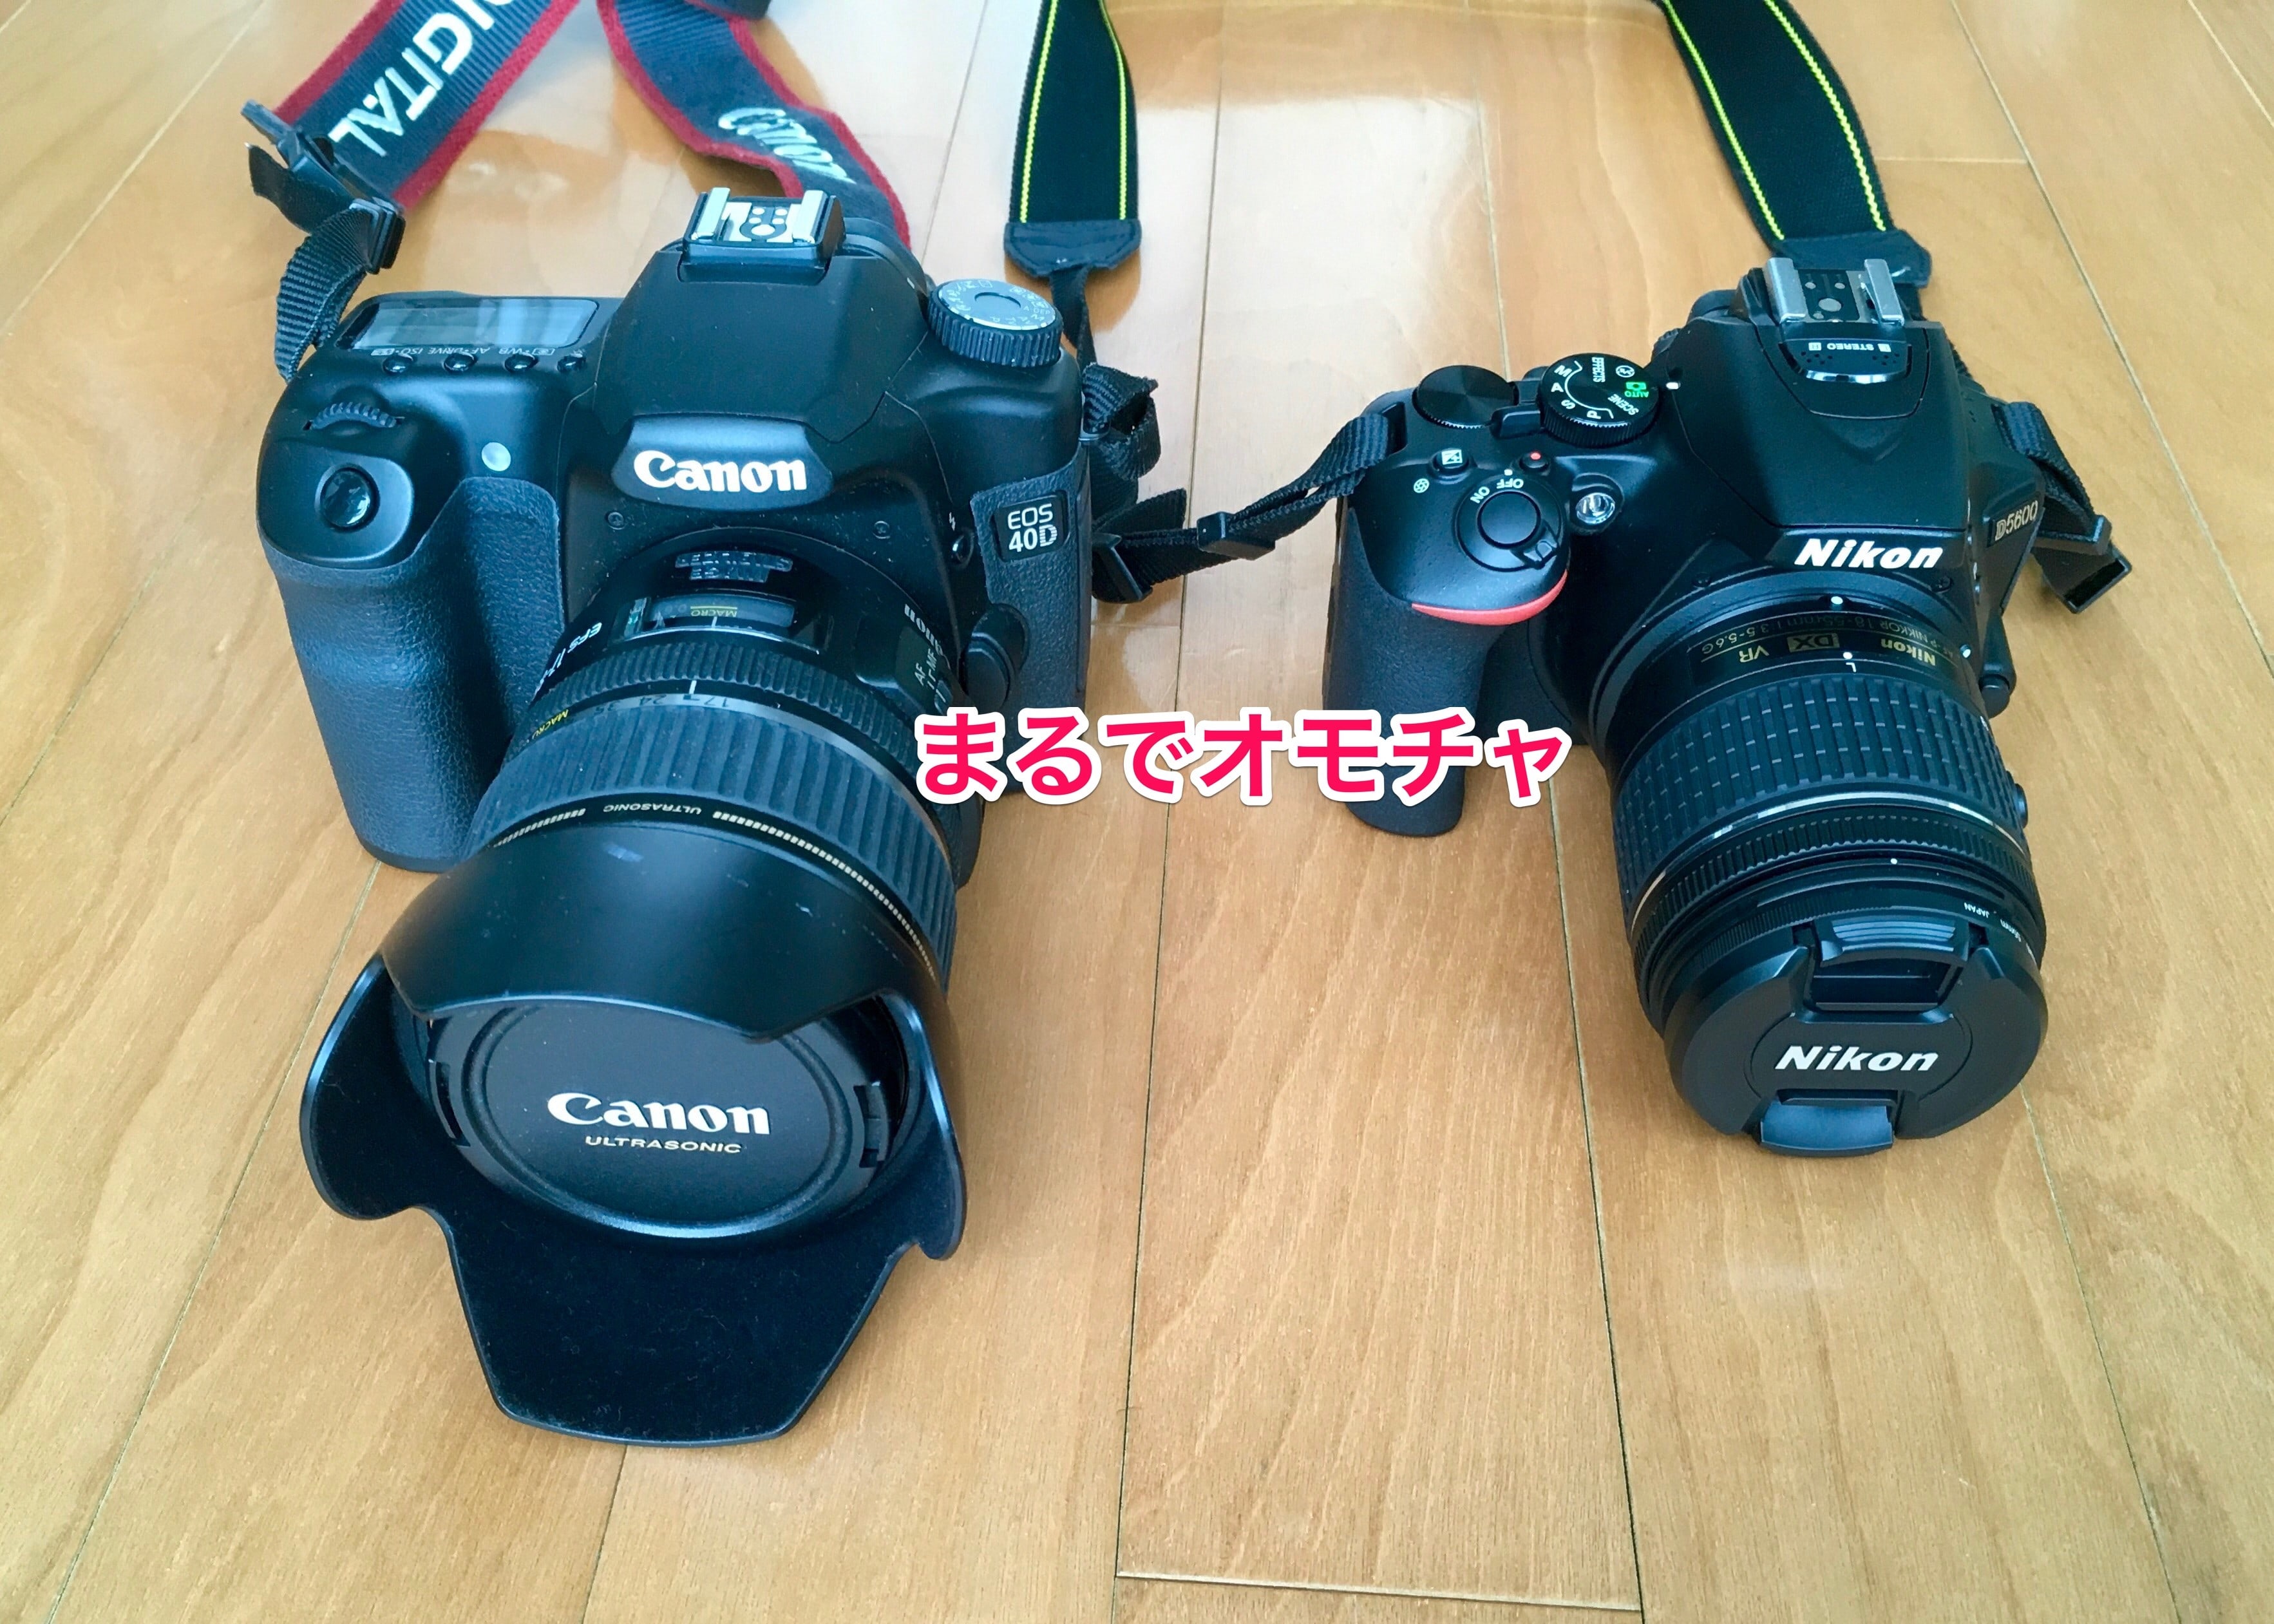 Nikon D5600 ダブルズームキット altakaful-ins.ps